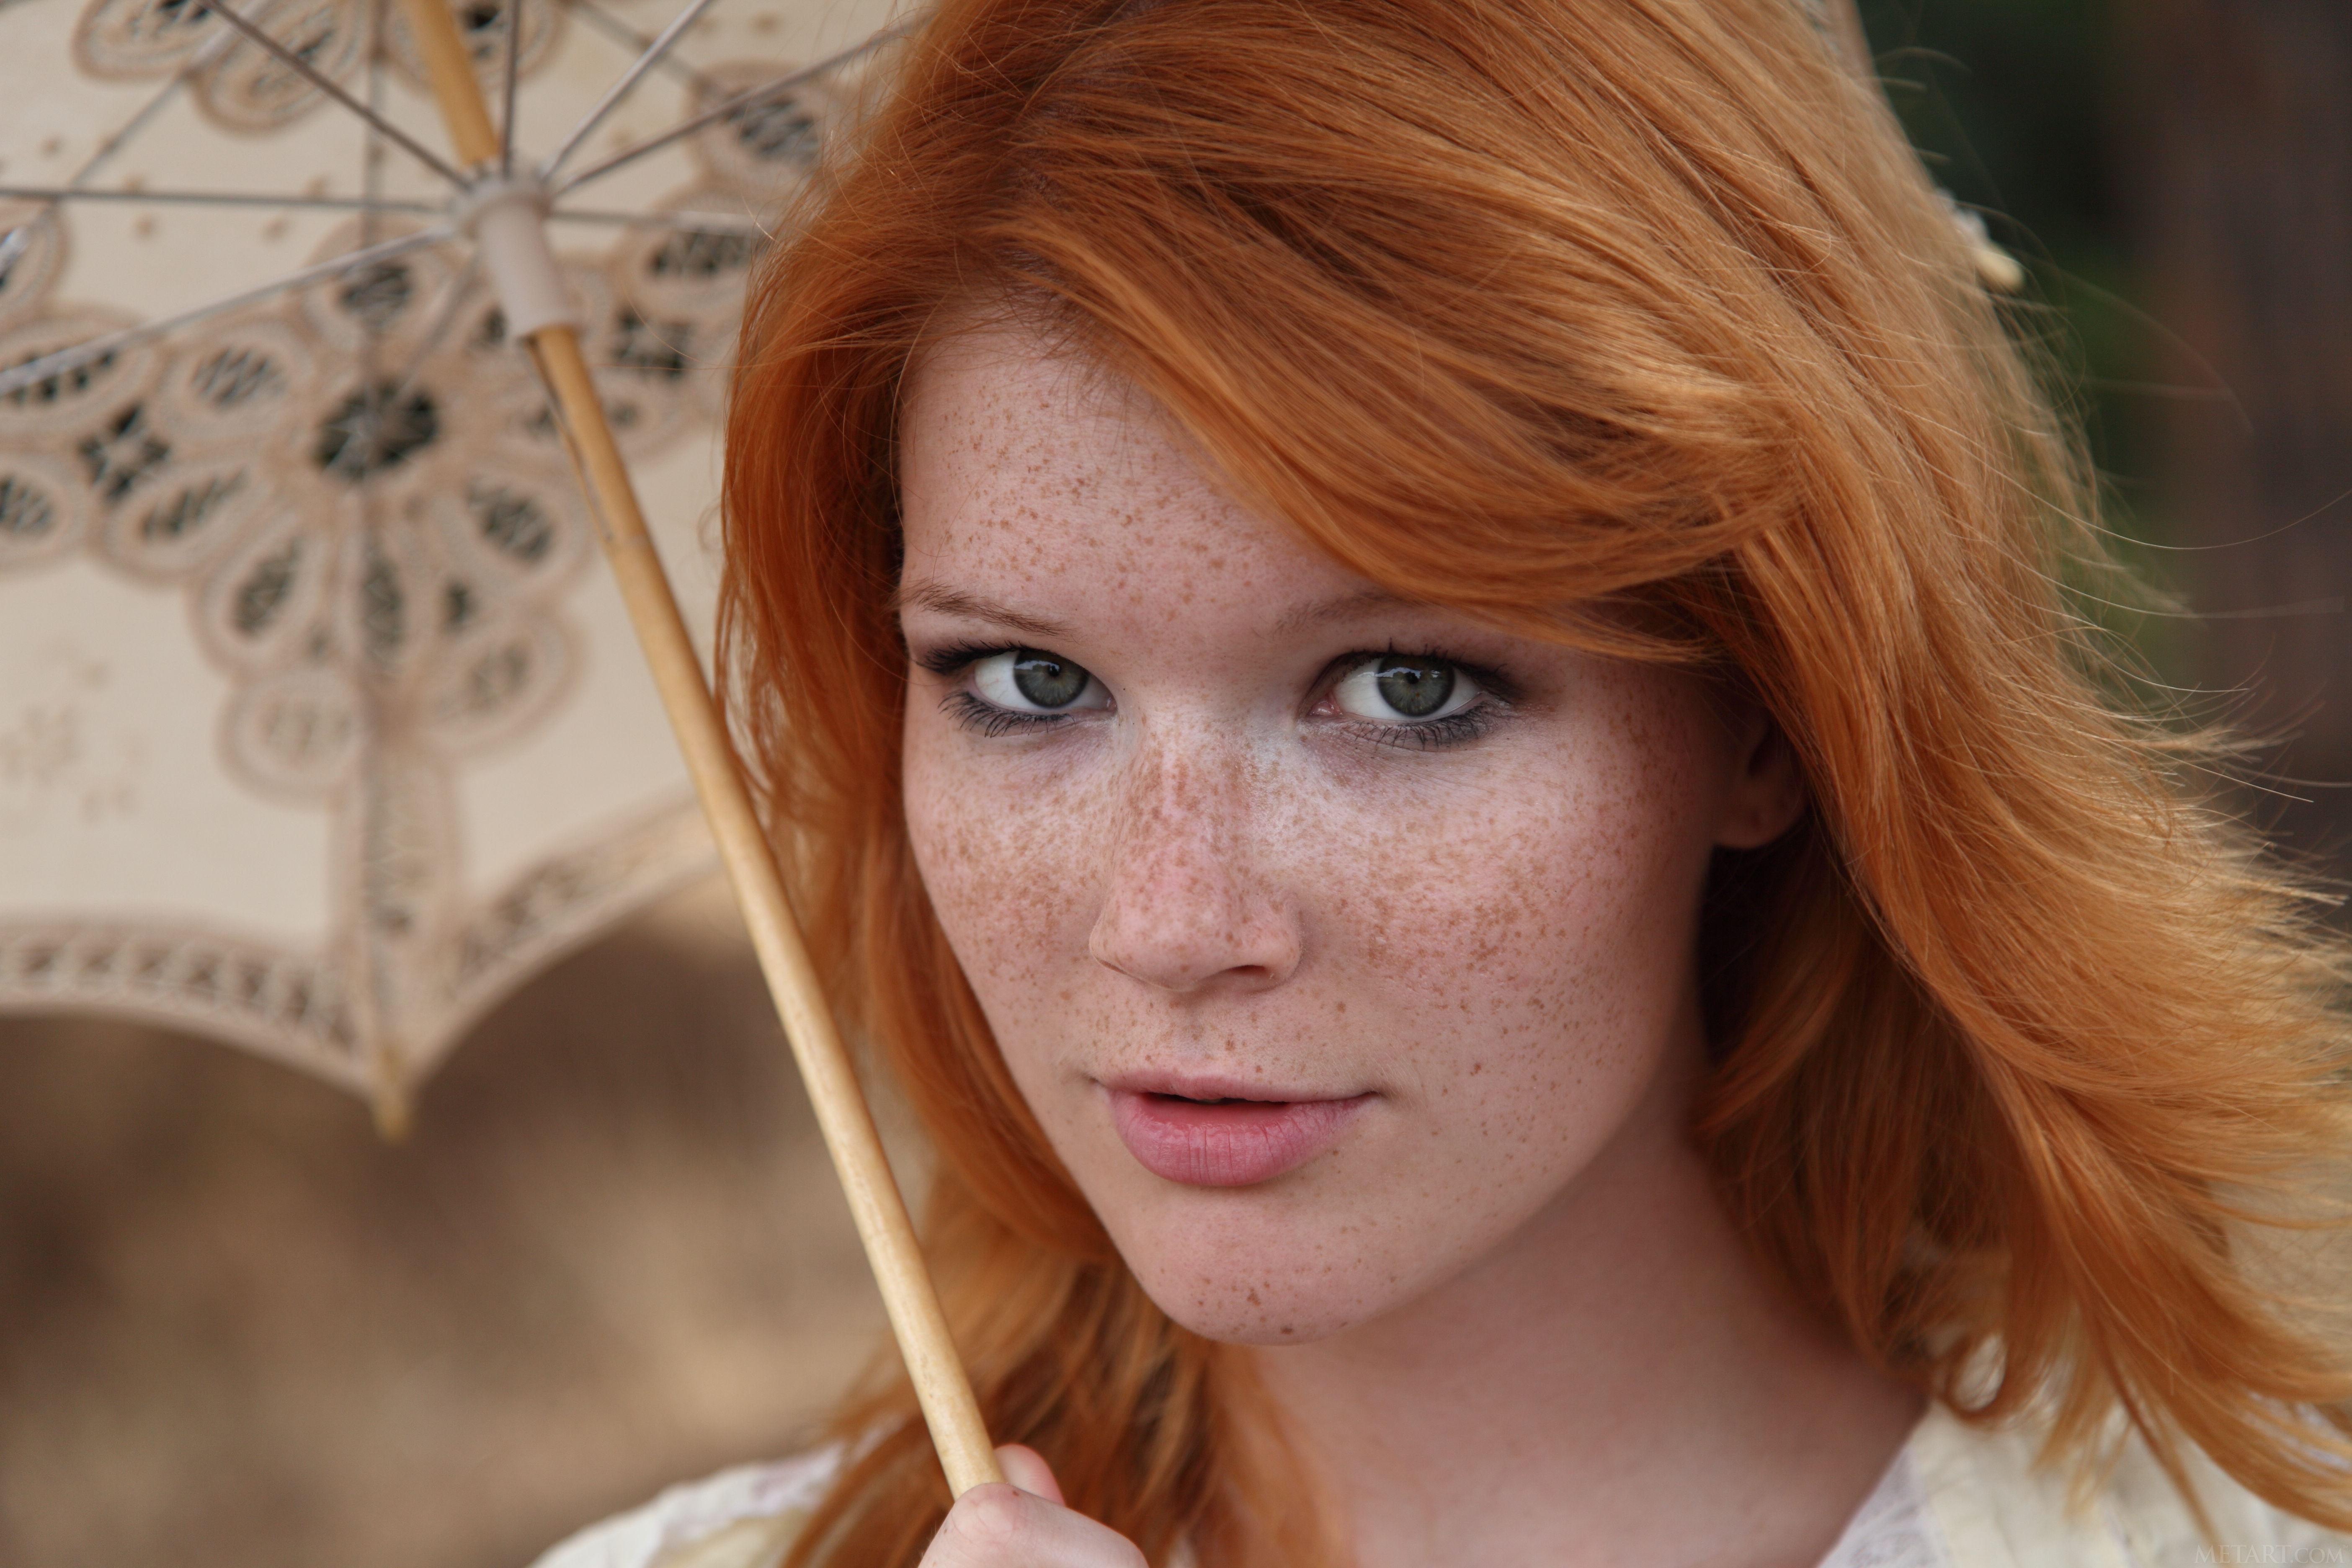 Mia Sollis Redhead Model Women Face Freckles Looking At Viewer Czech Women Portrait